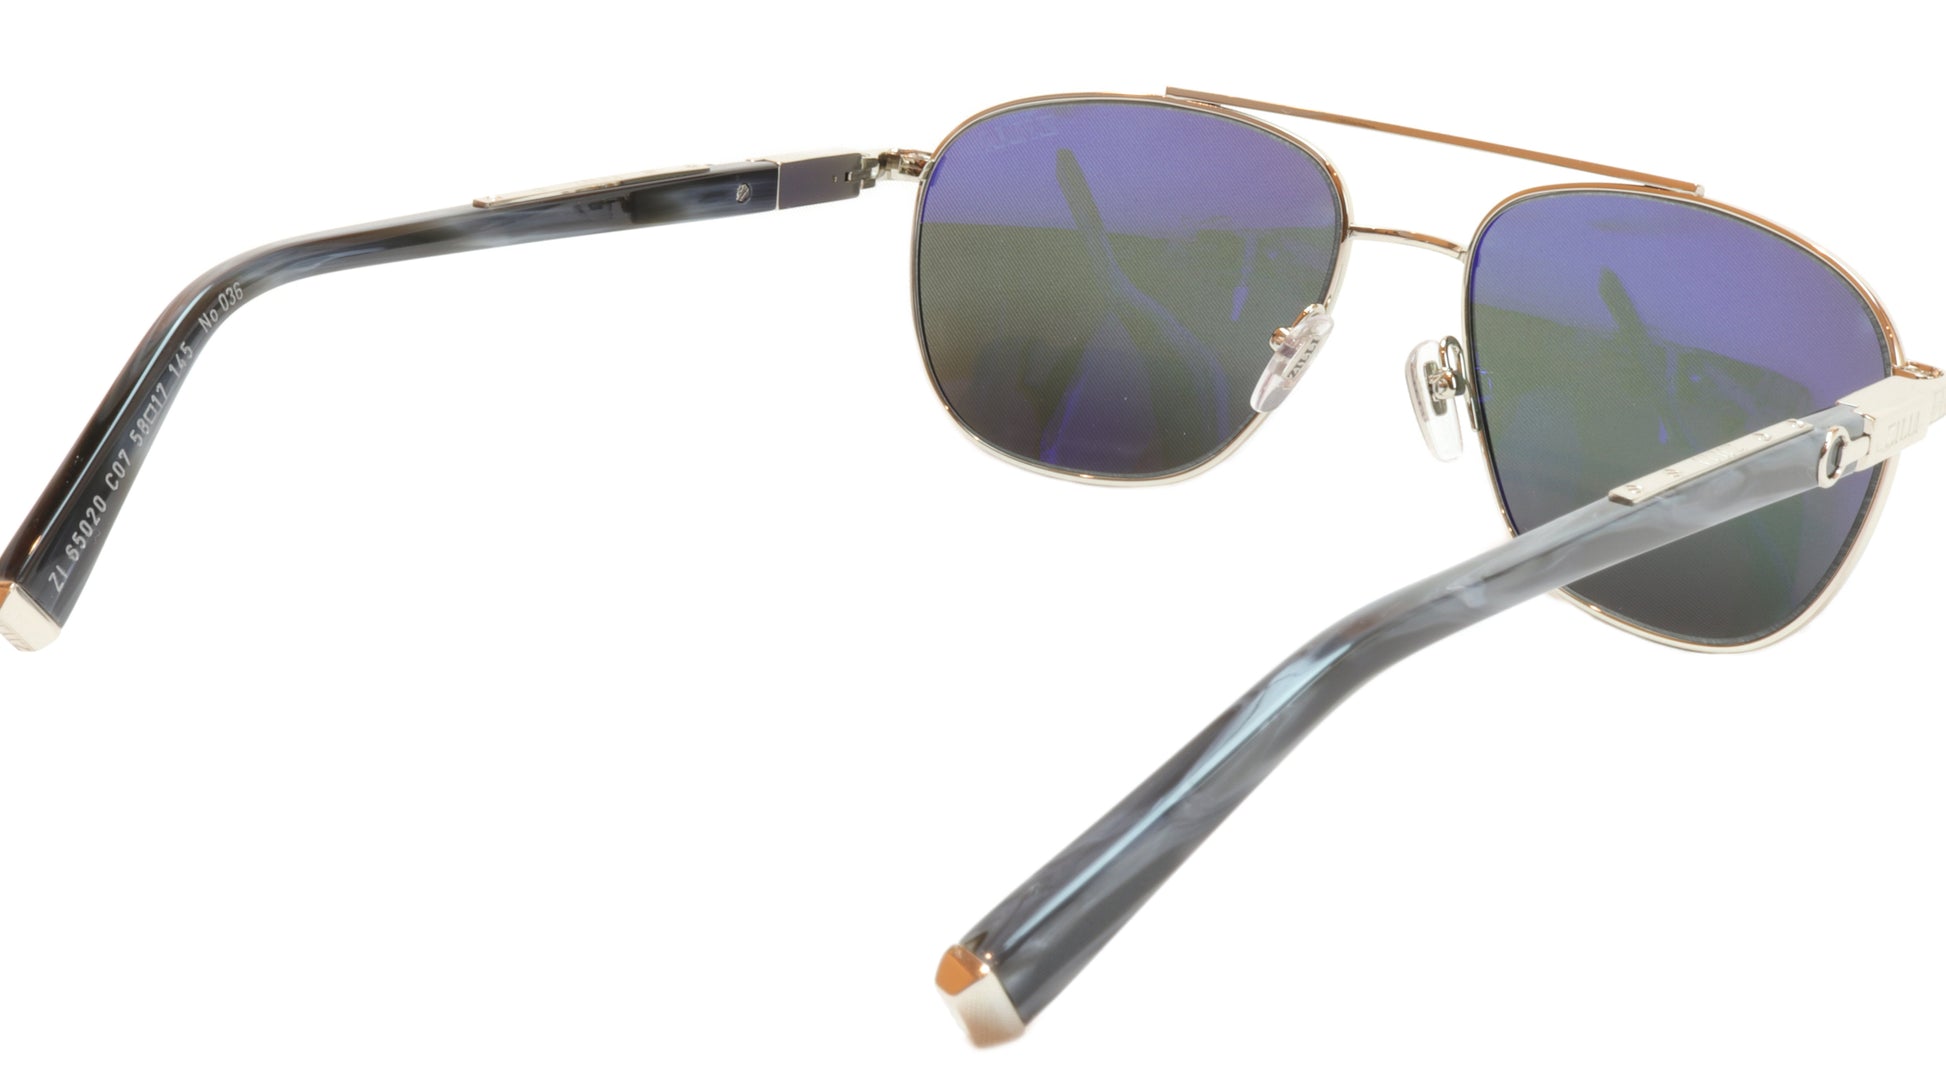 ZILLI Sunglasses Titanium Acetate Bright Silver Polarized France ZI 65020 C07 - Frame Bay